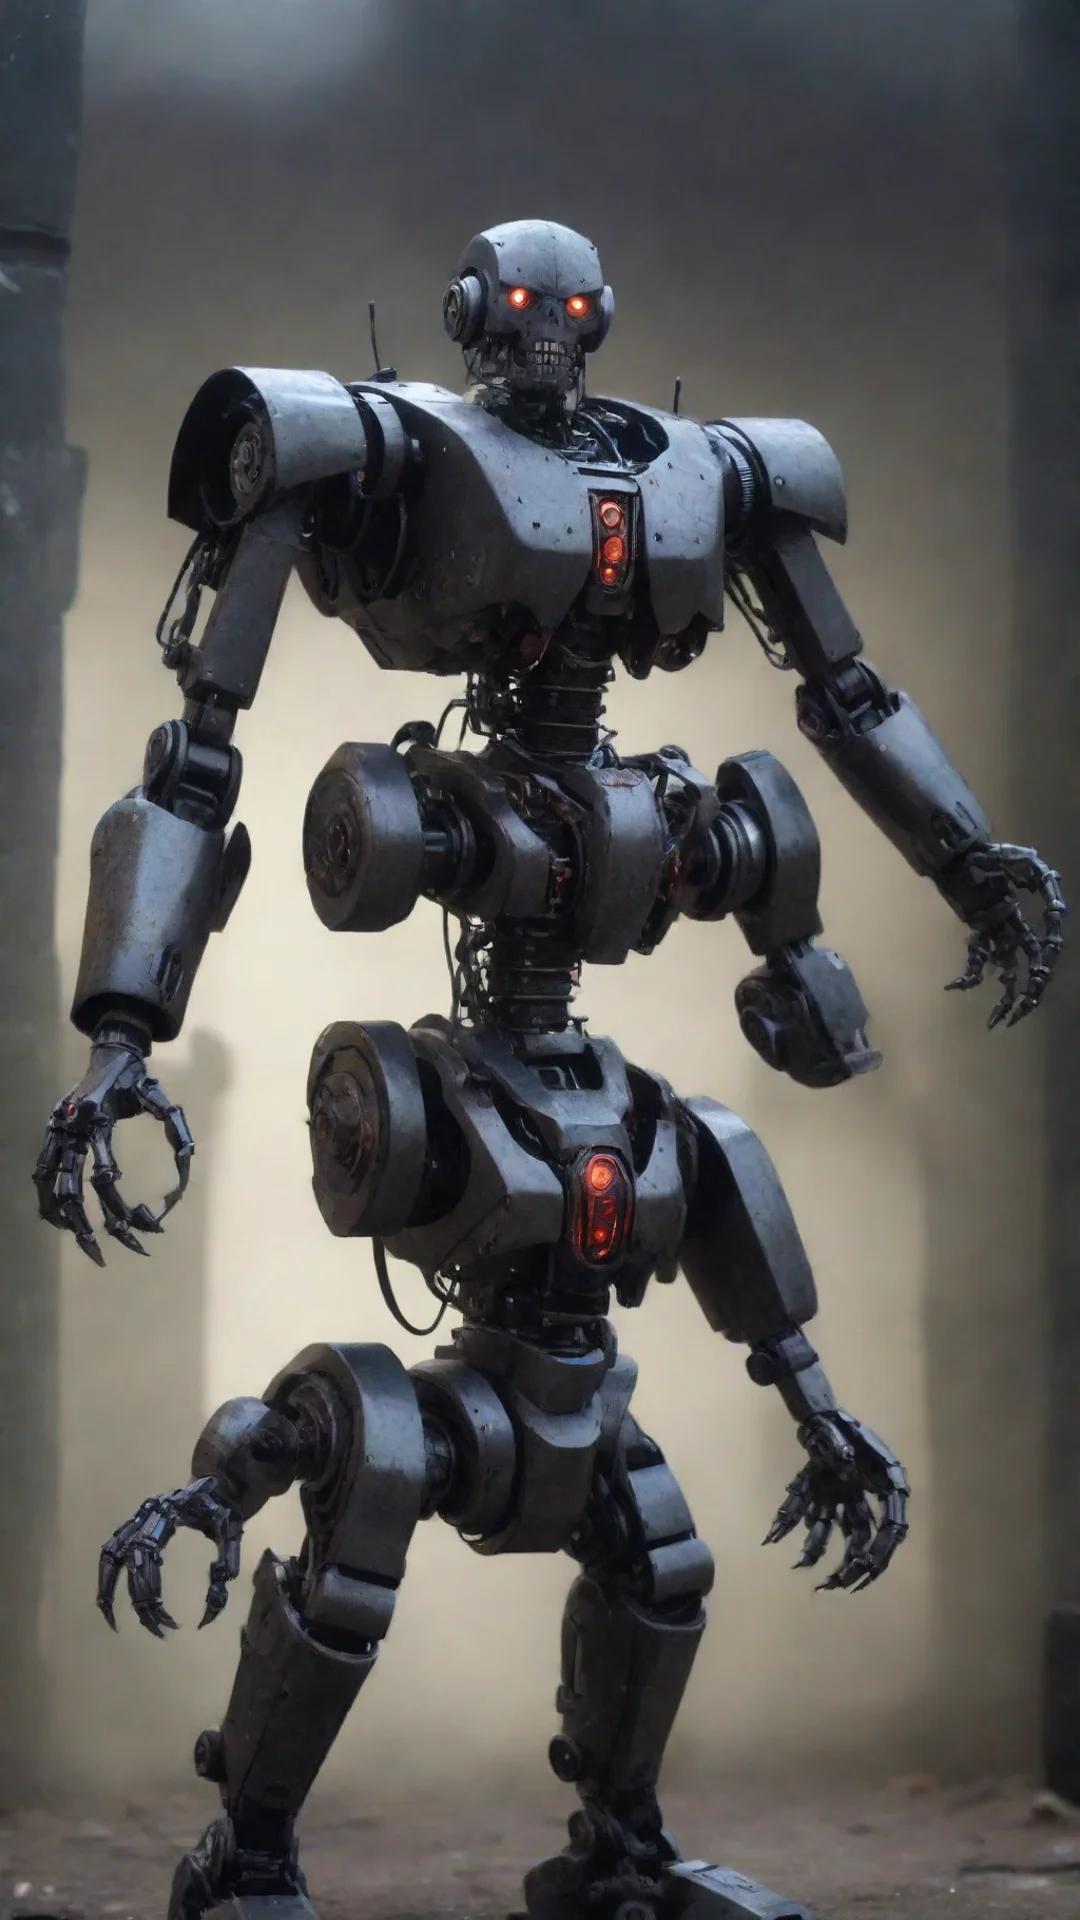 artstation art grimdark evil ai overlord robot confident engaging wow 3 tall